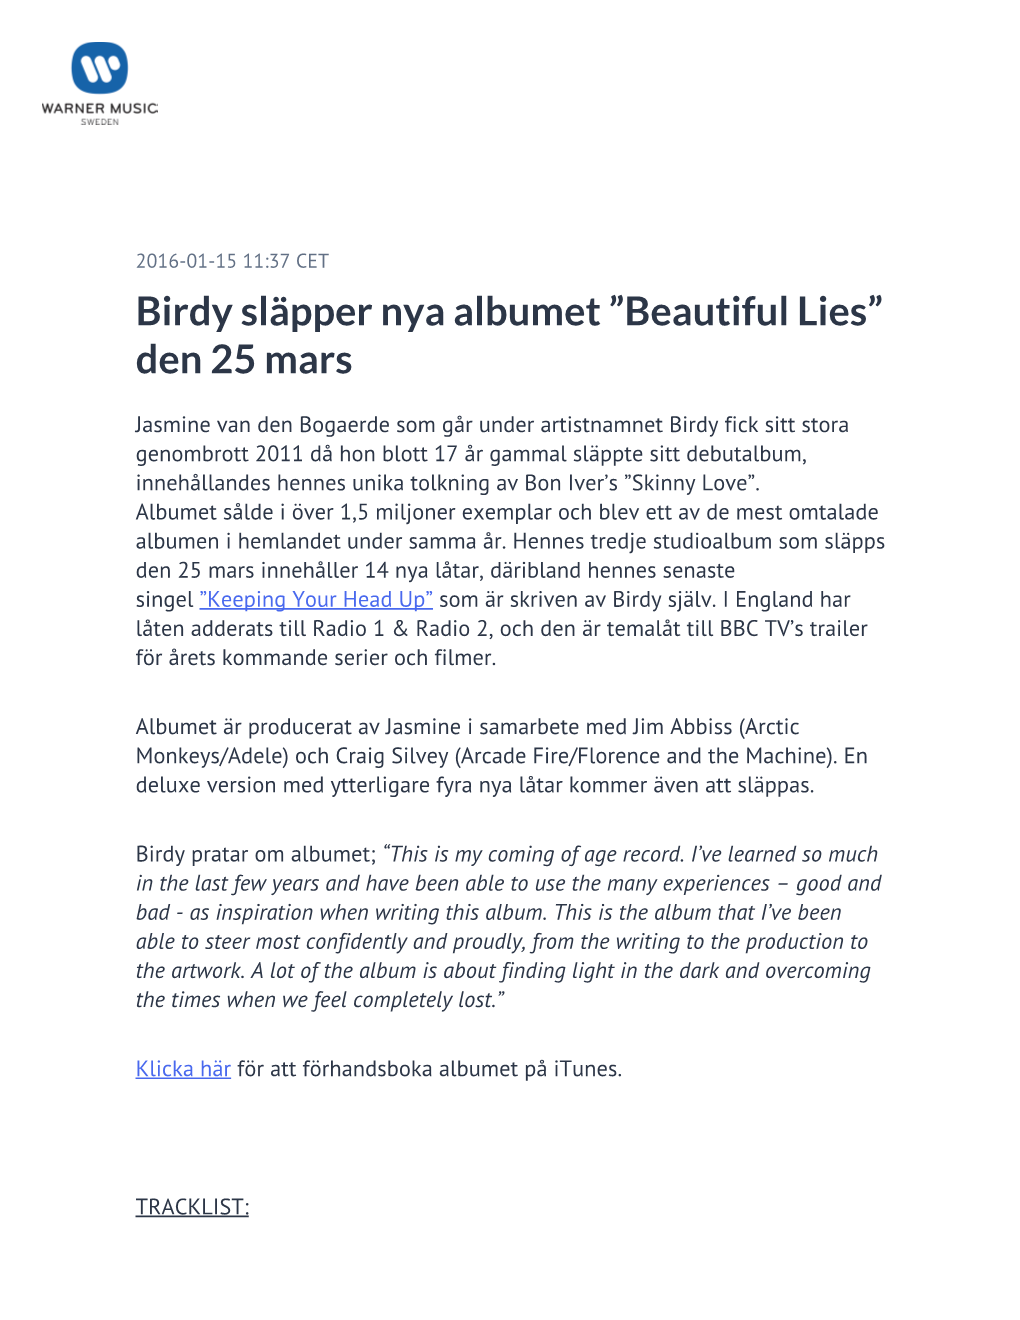 Birdy Släpper Nya Albumet ”Beautiful Lies” Den 25 Mars